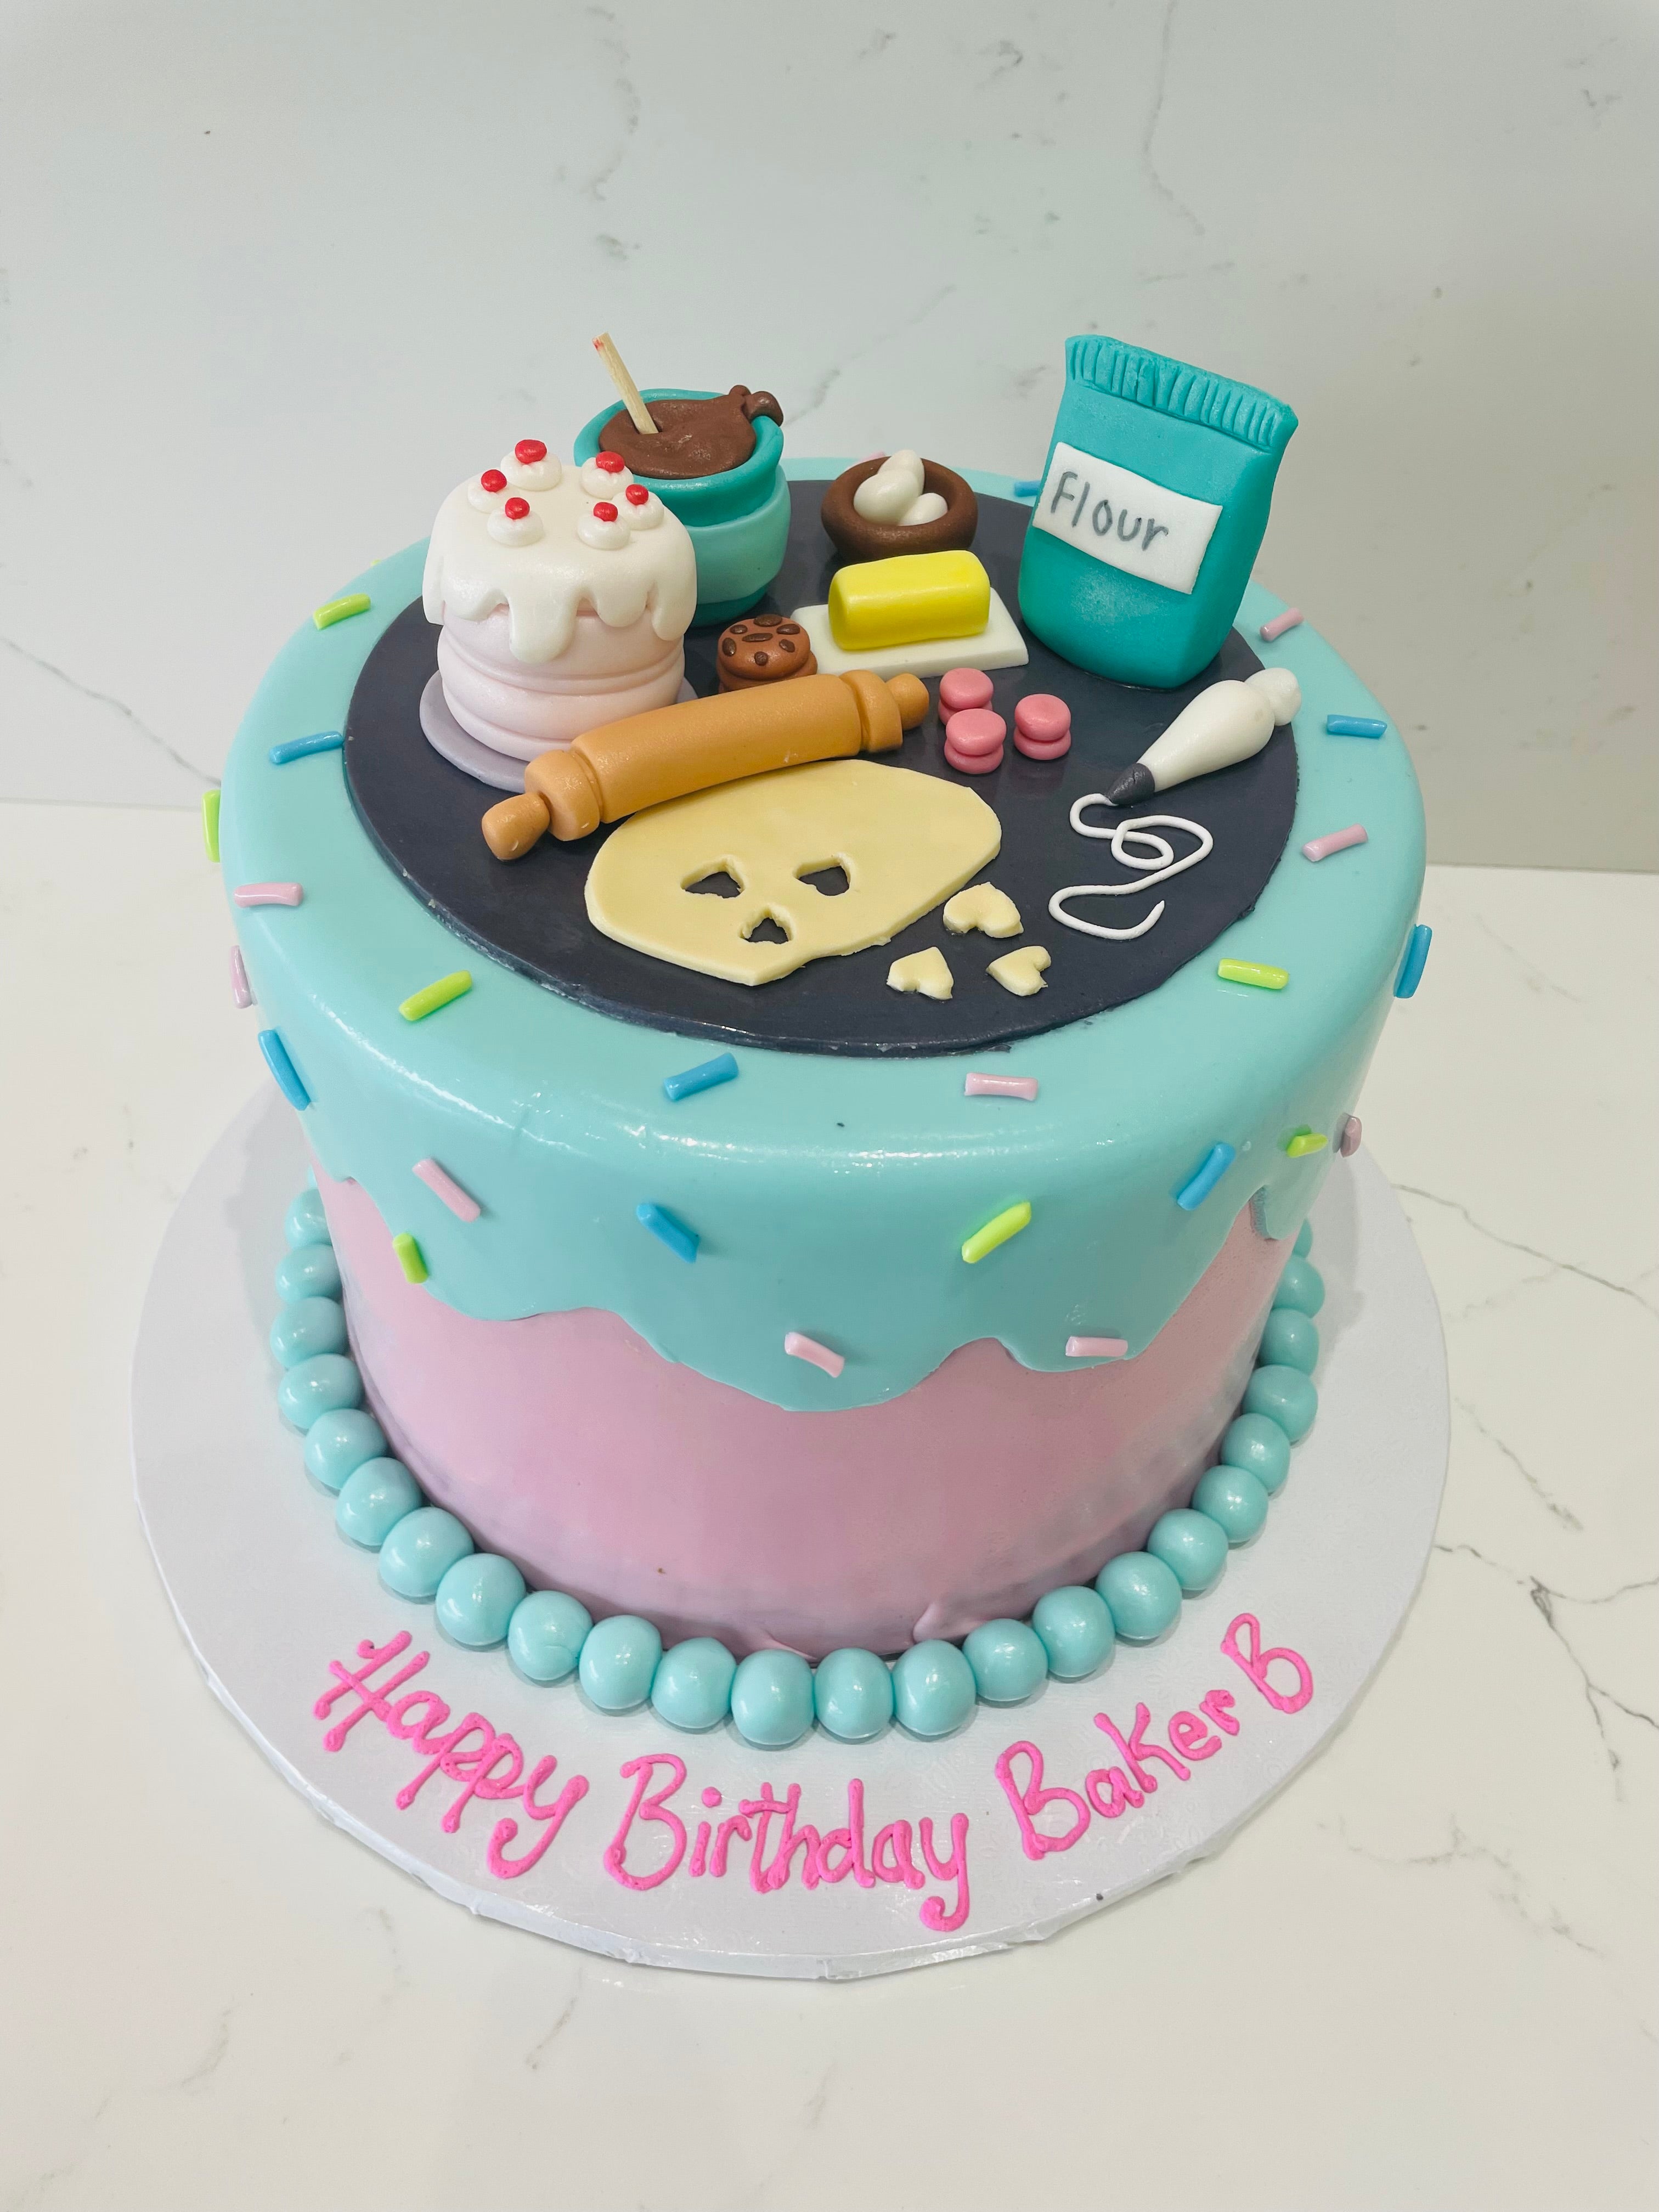 How to Bake the Perfect Birthday Cake - BettyCrocker.com